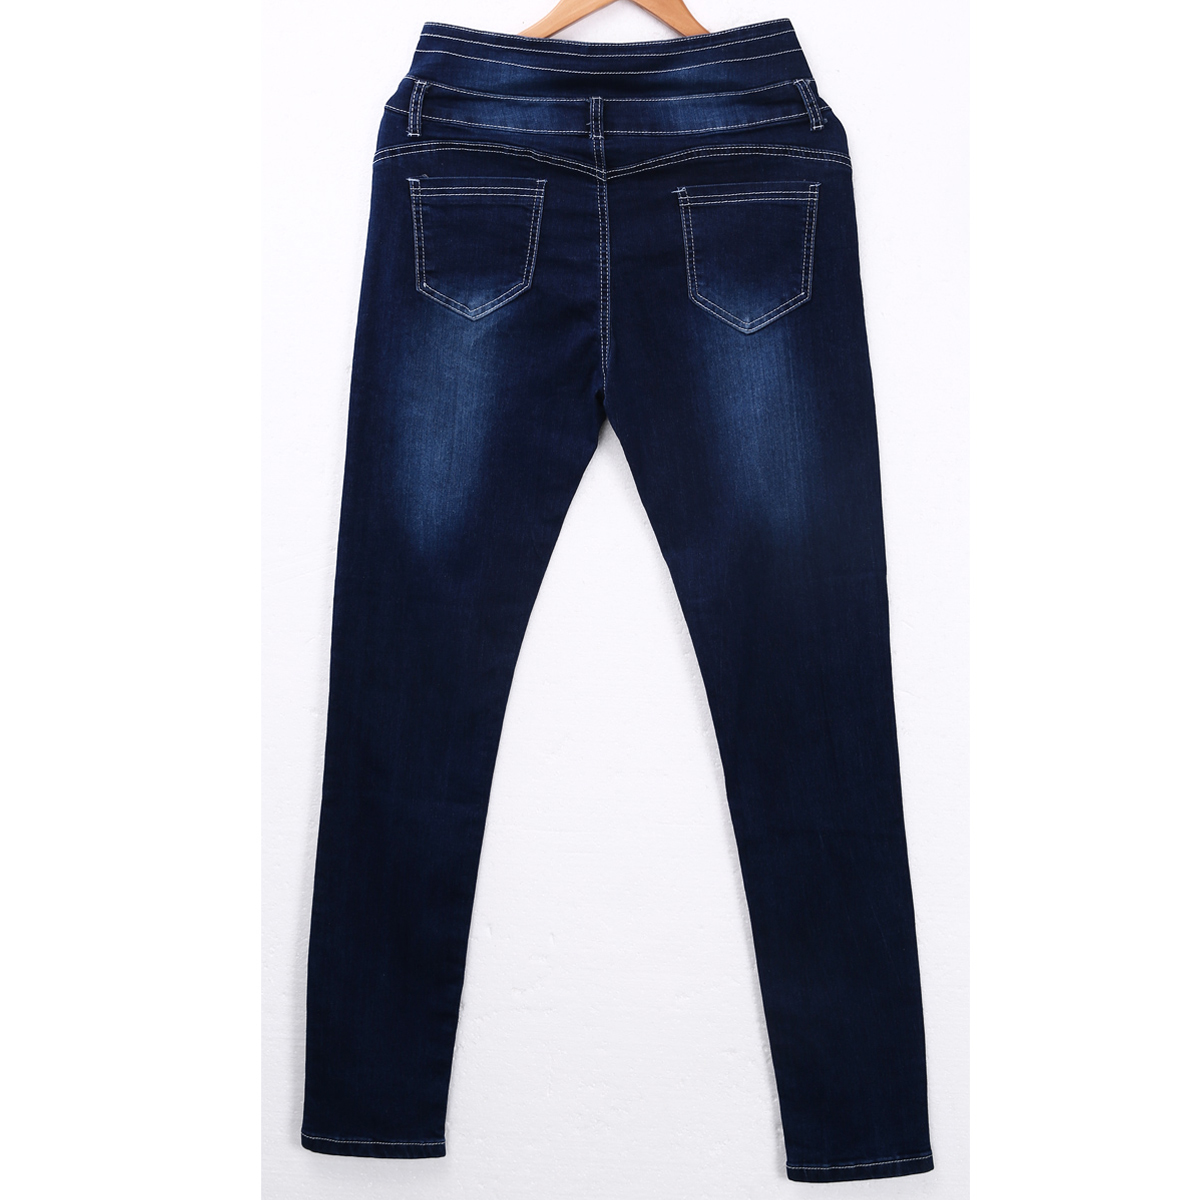 Women's high waist stretch pants denim pencil skinny jeans trousers Indigo Blue - image 4 of 5